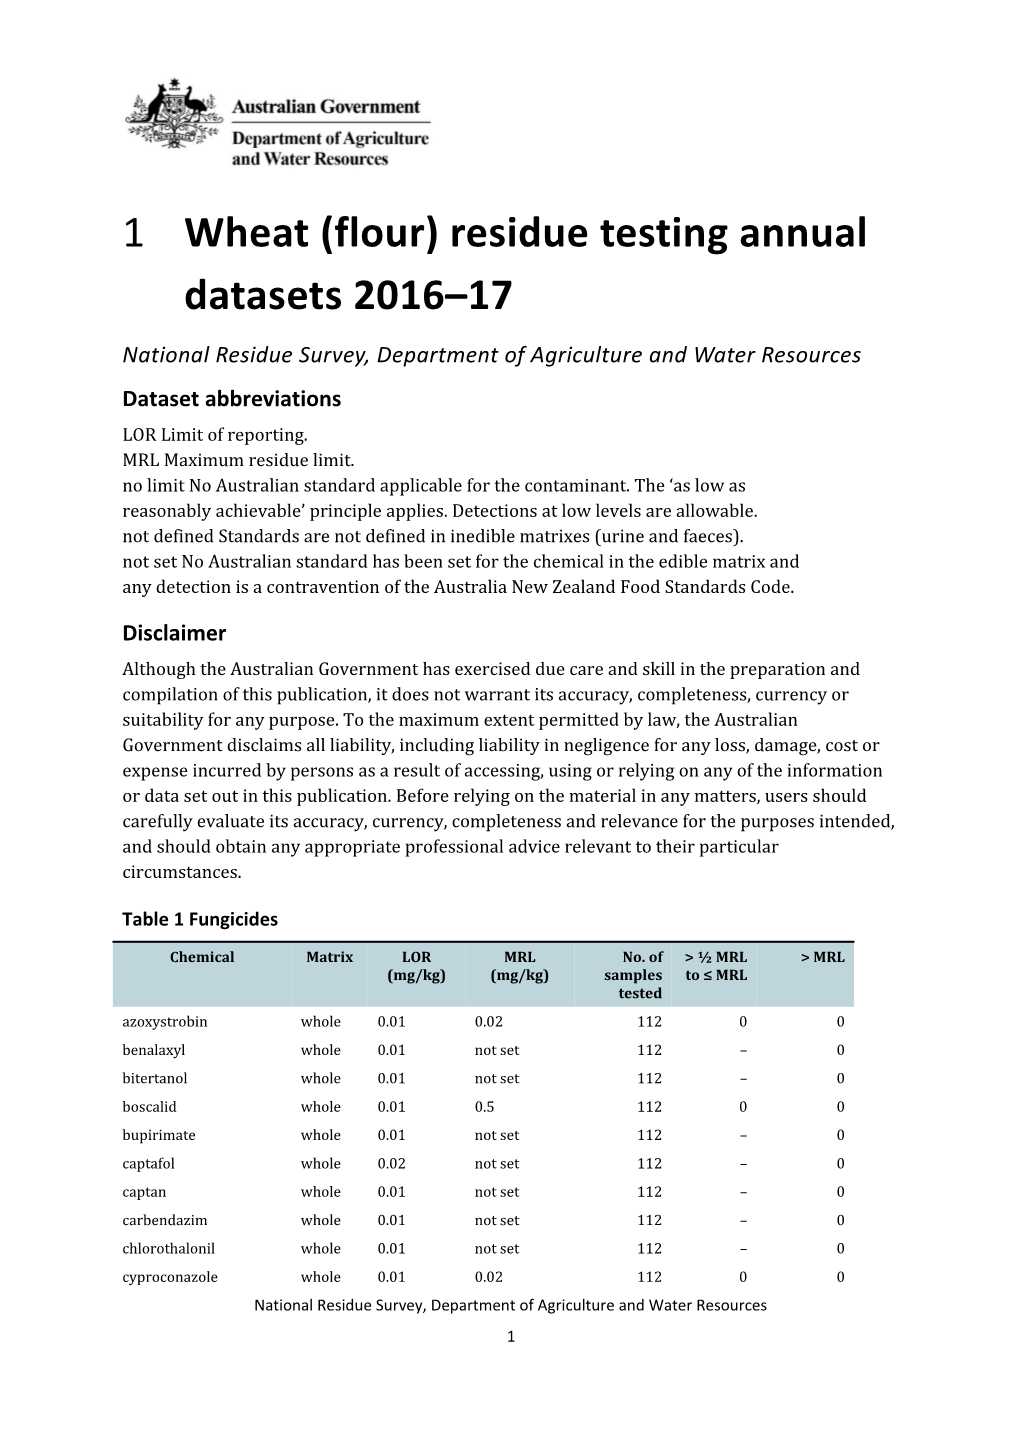 Sunflower Residue Testing Annual Datasets 2016-17